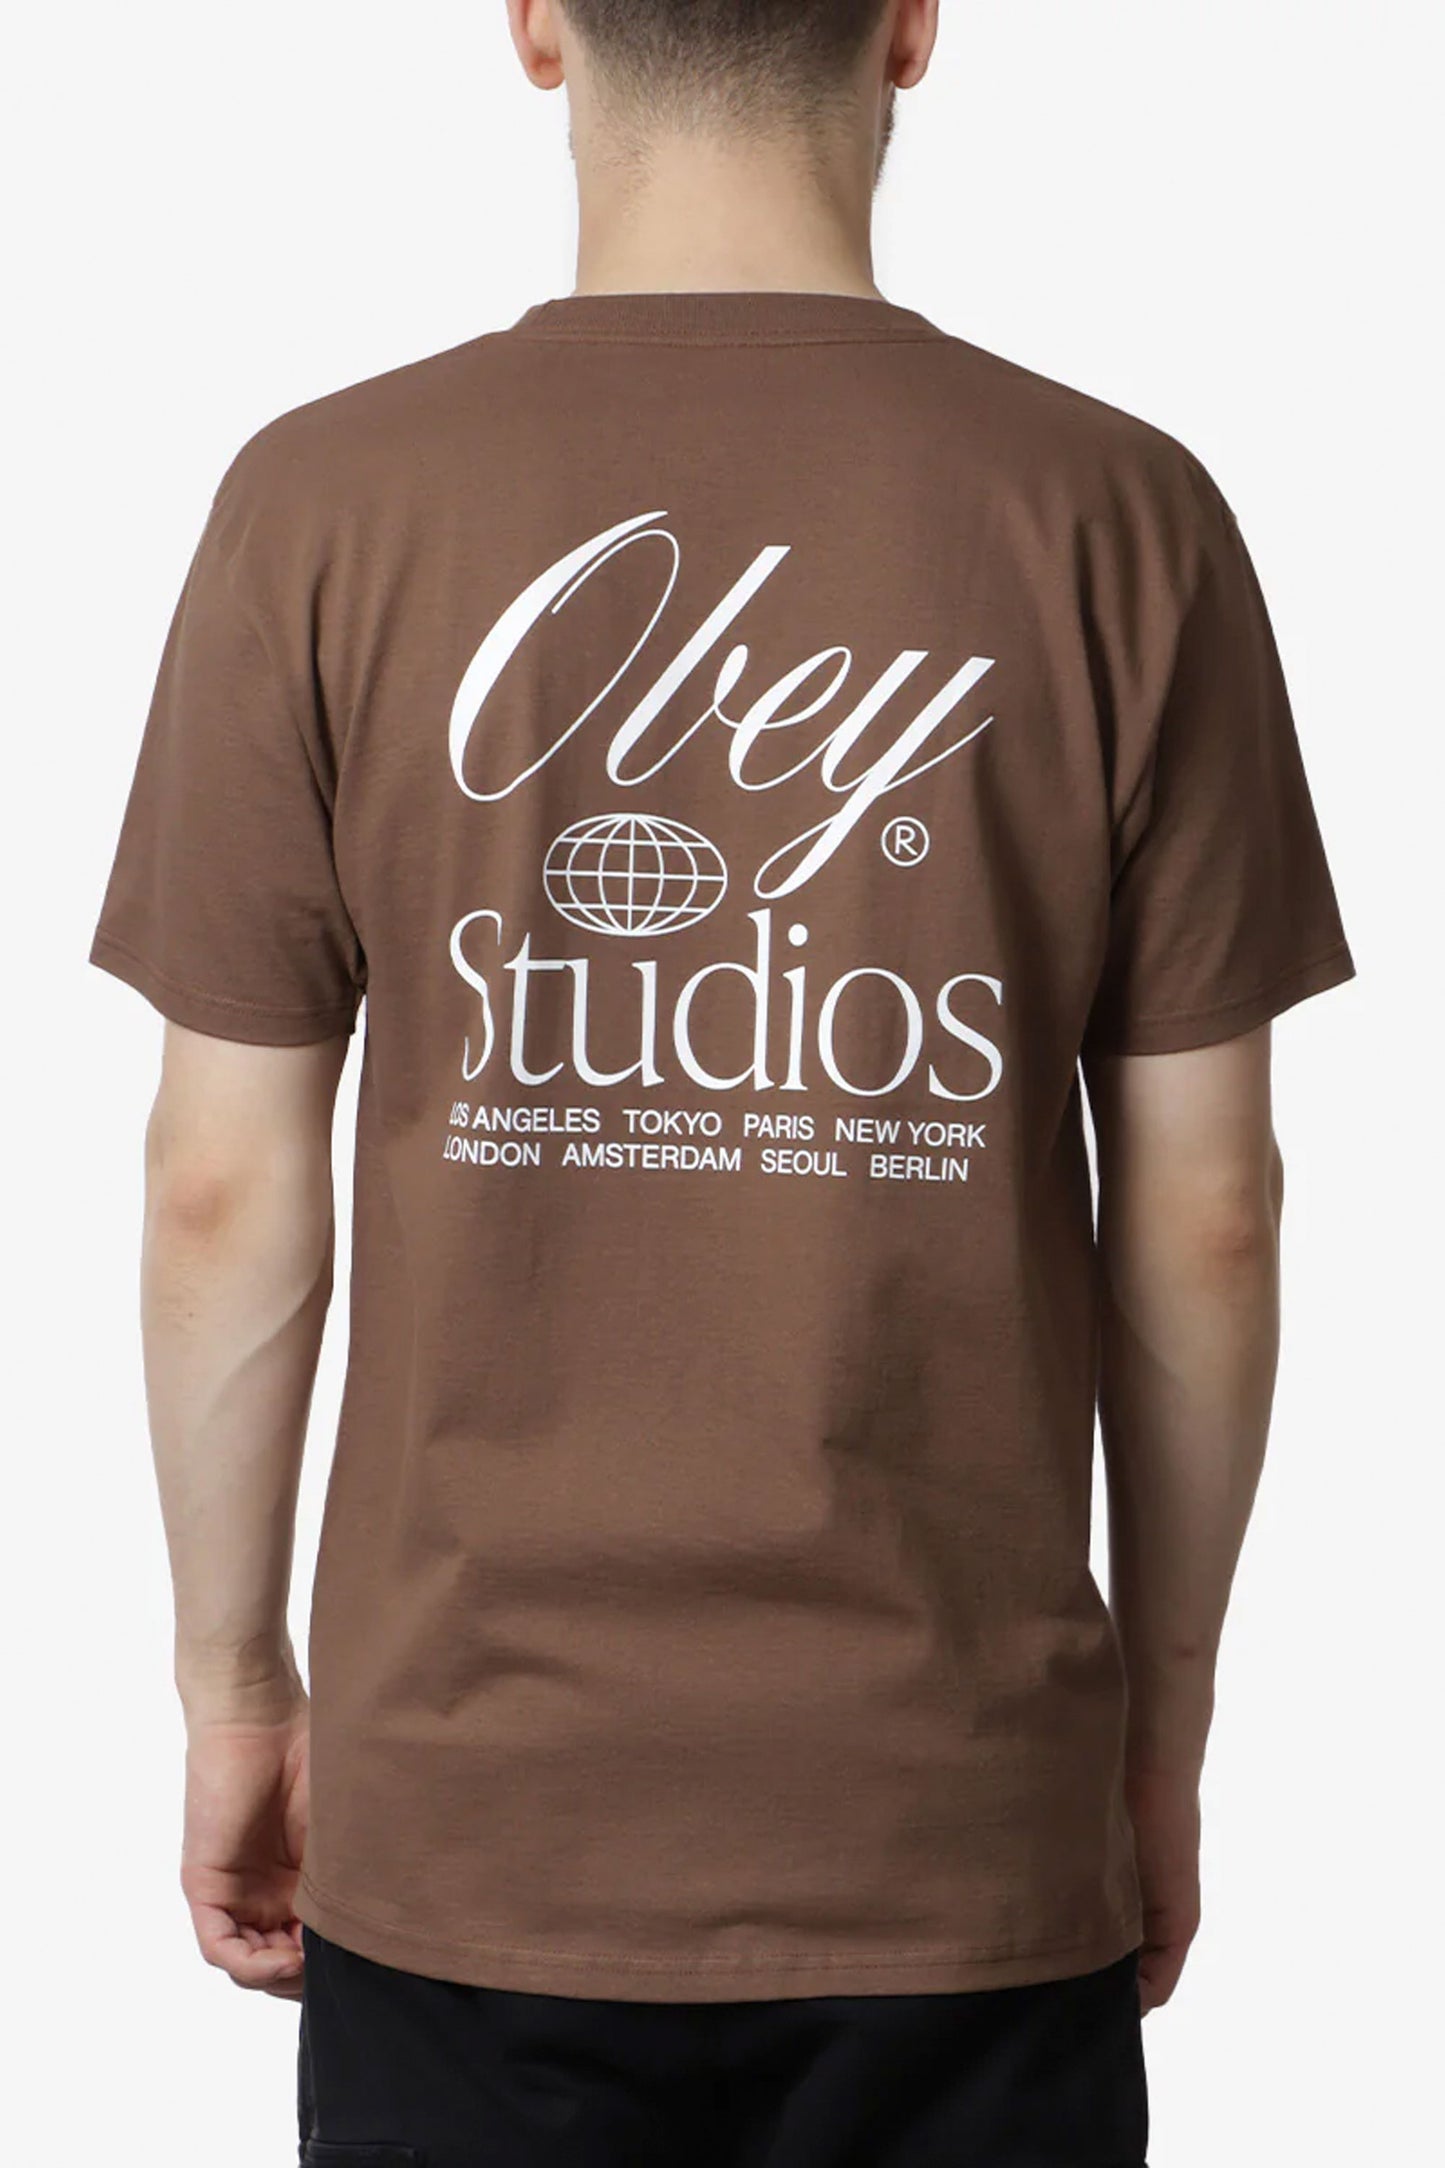 Pukas-surf-shop-man-tees-OBEY-Studios-Worldwide-T-Shirt